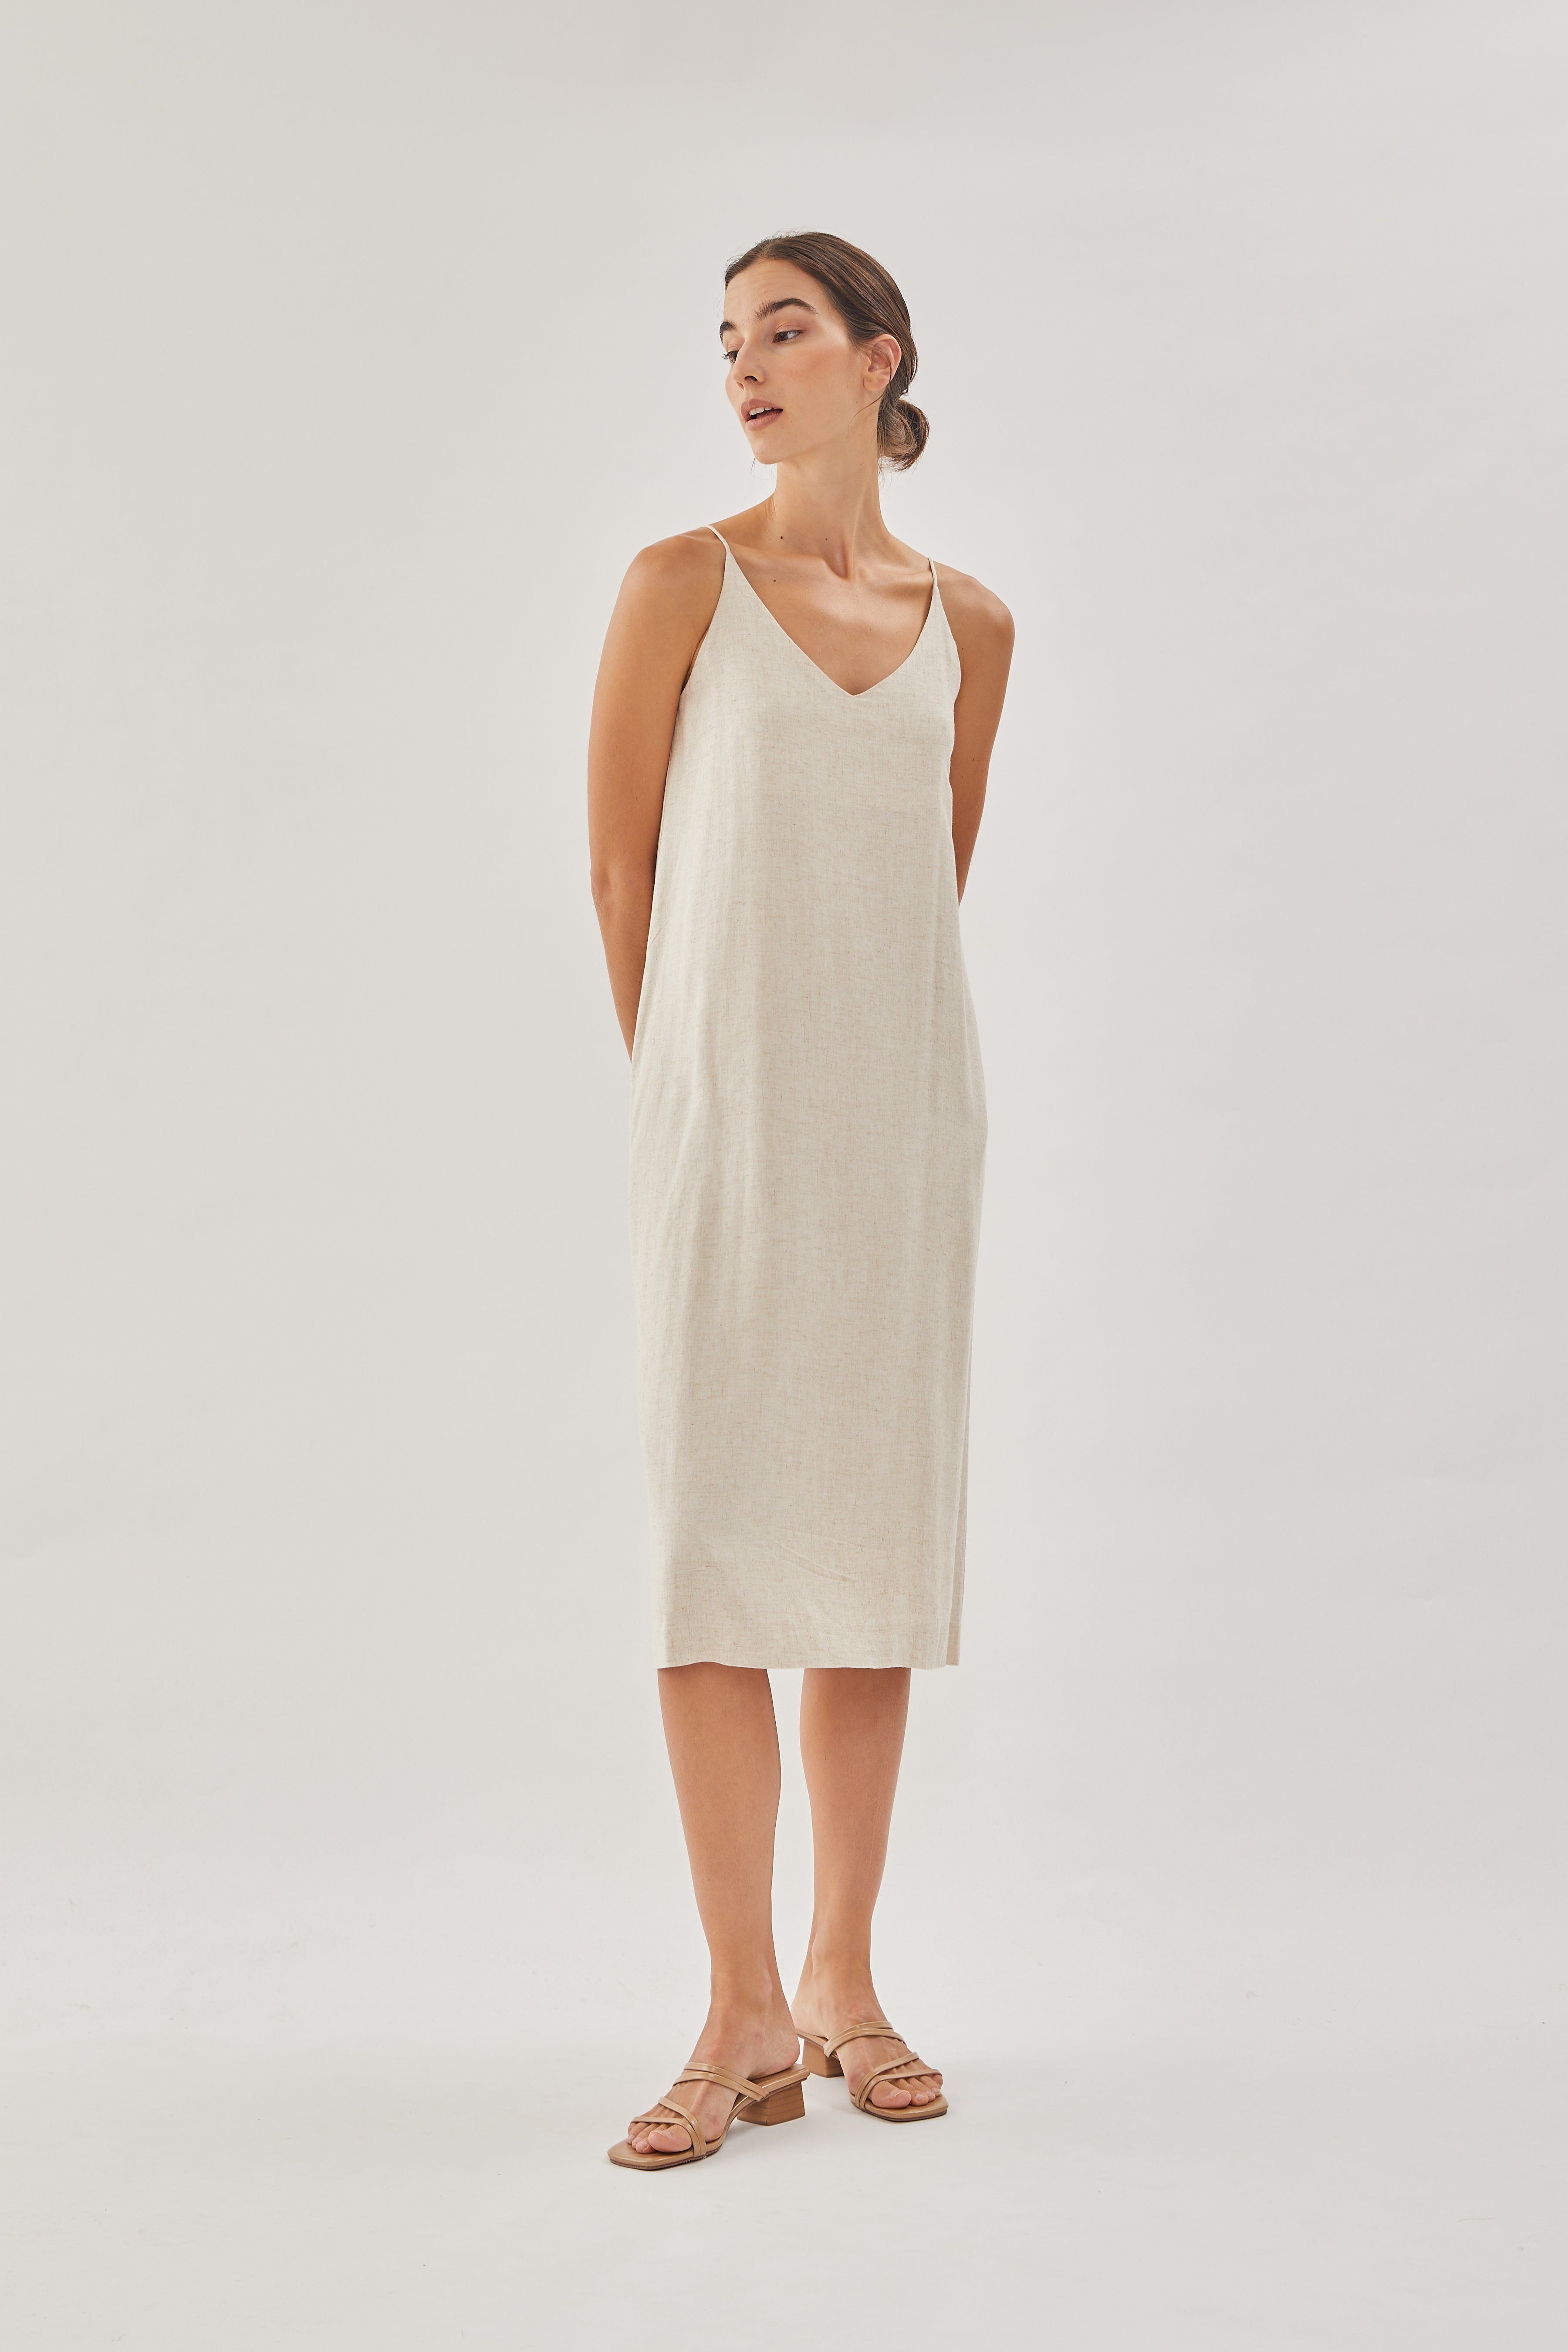 STUDIOS Linen Slip Dress in Natural